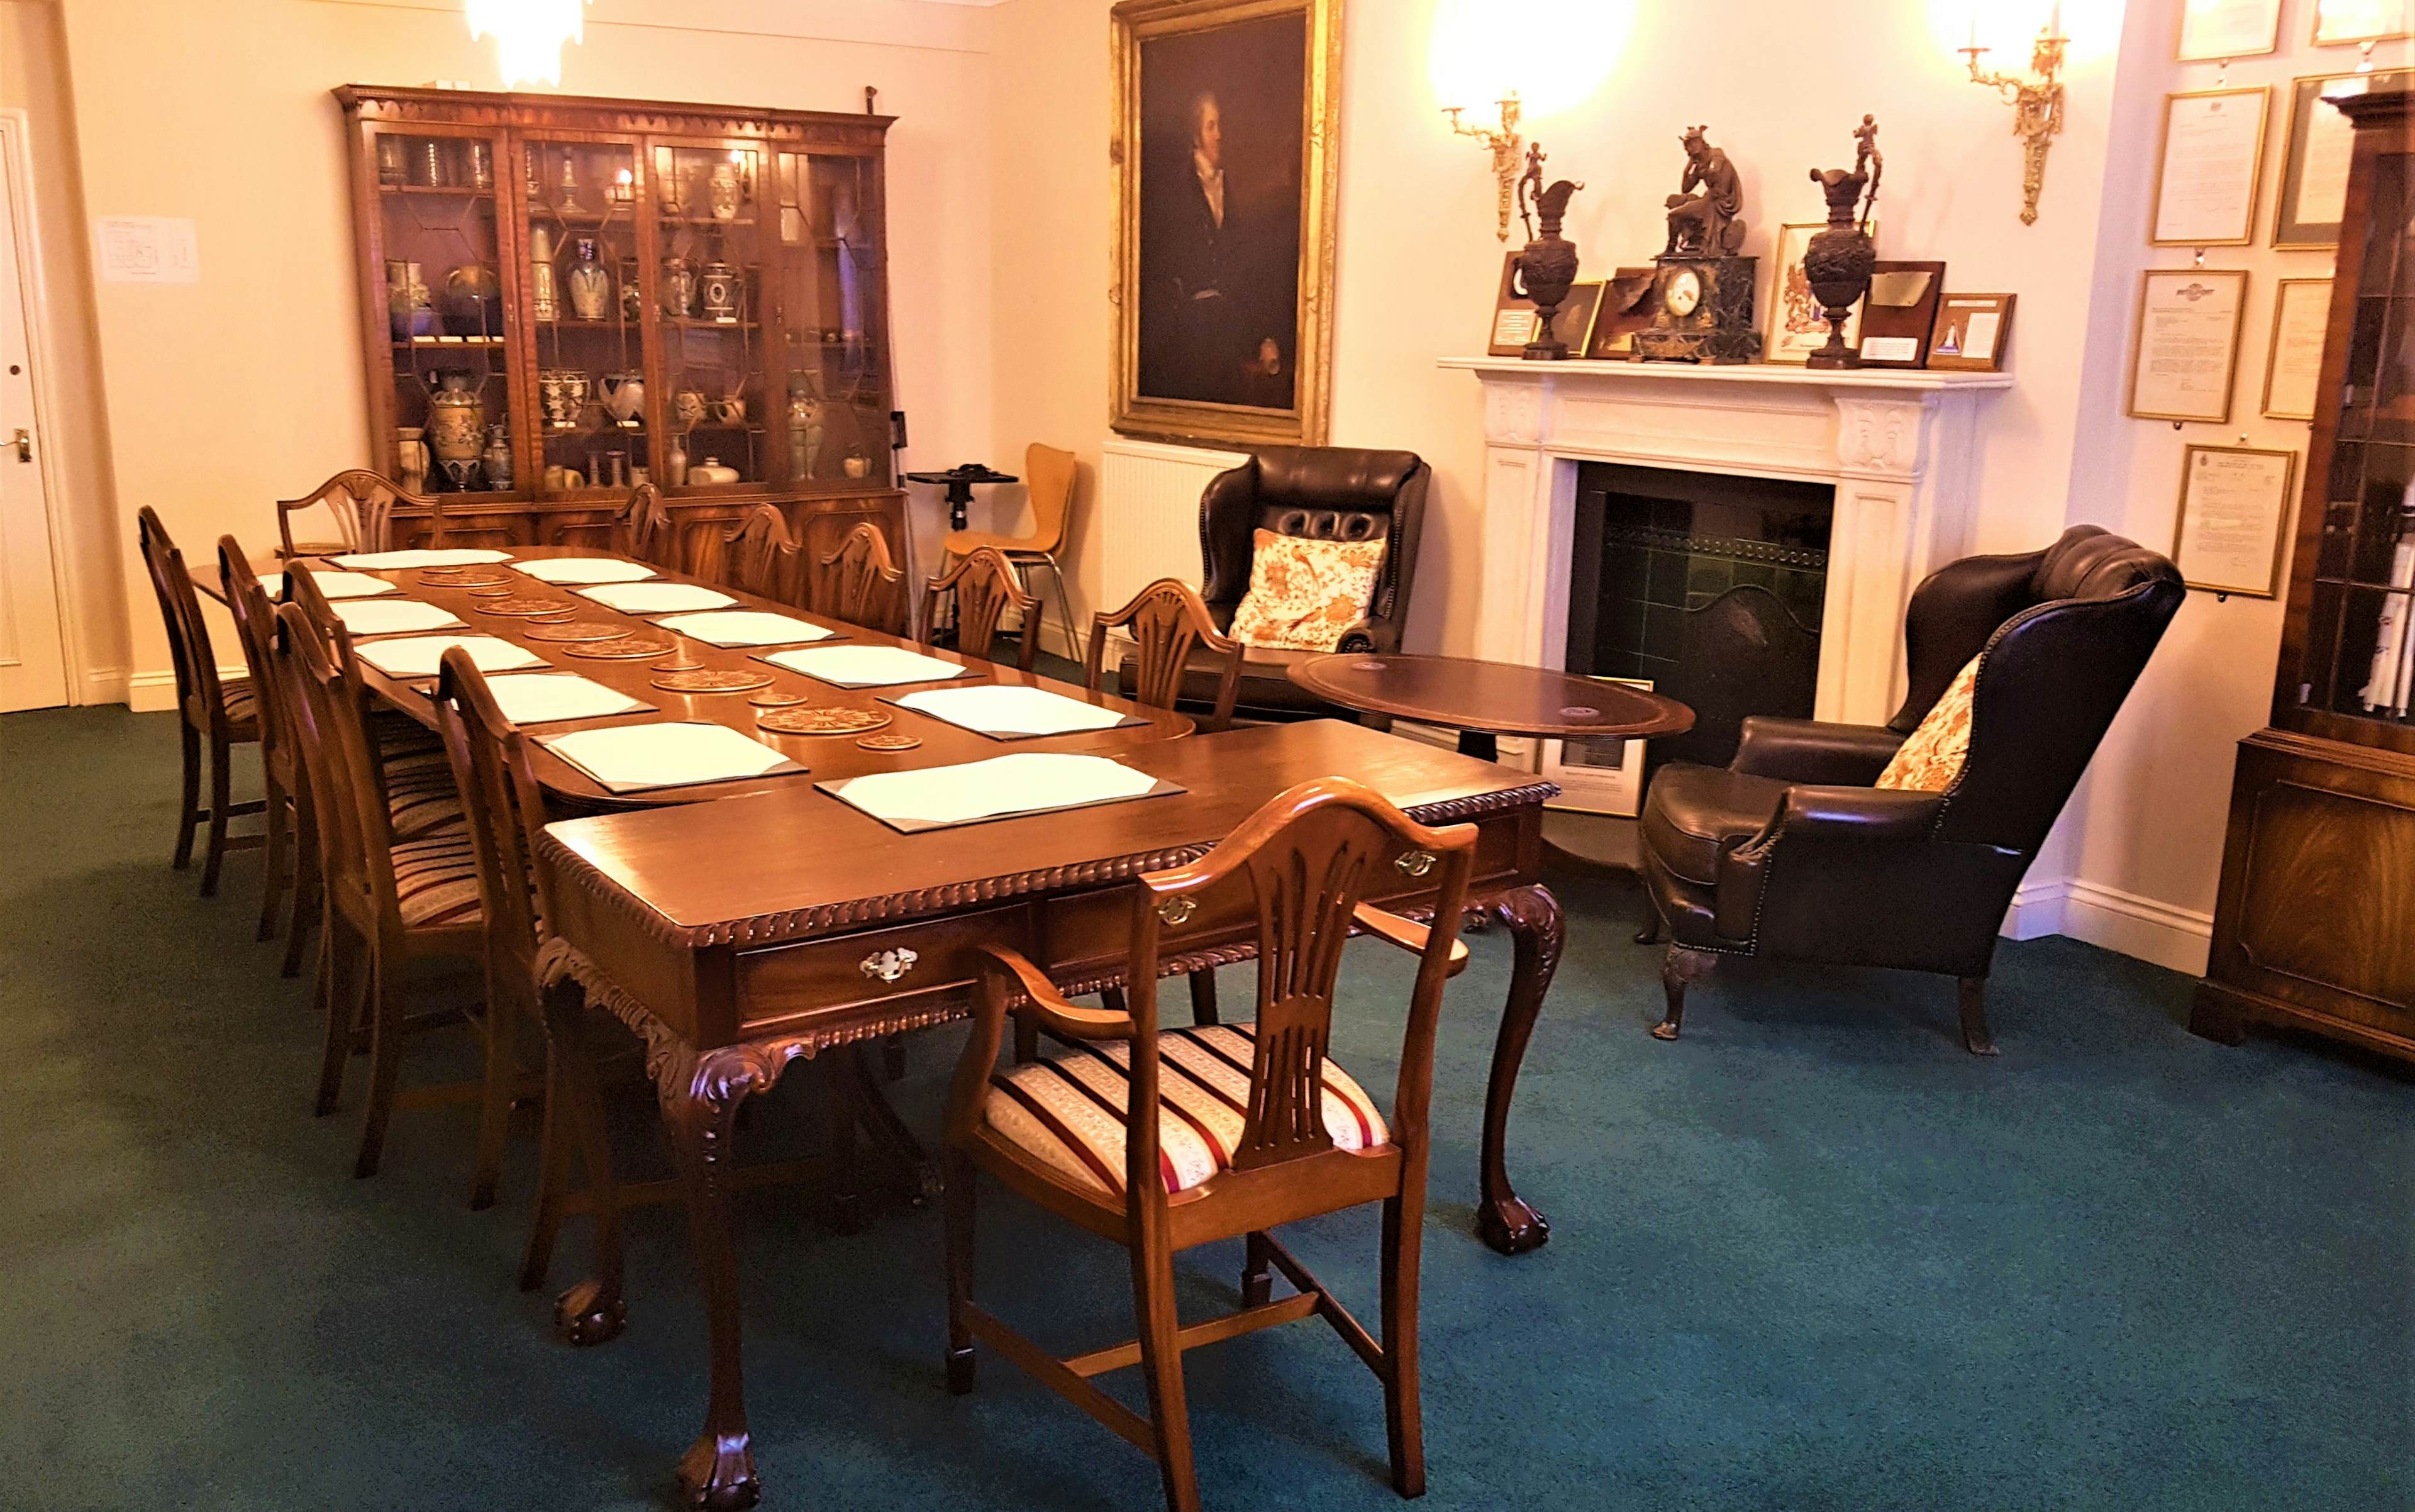 Arthur C. Clarke House - Council Room image 1